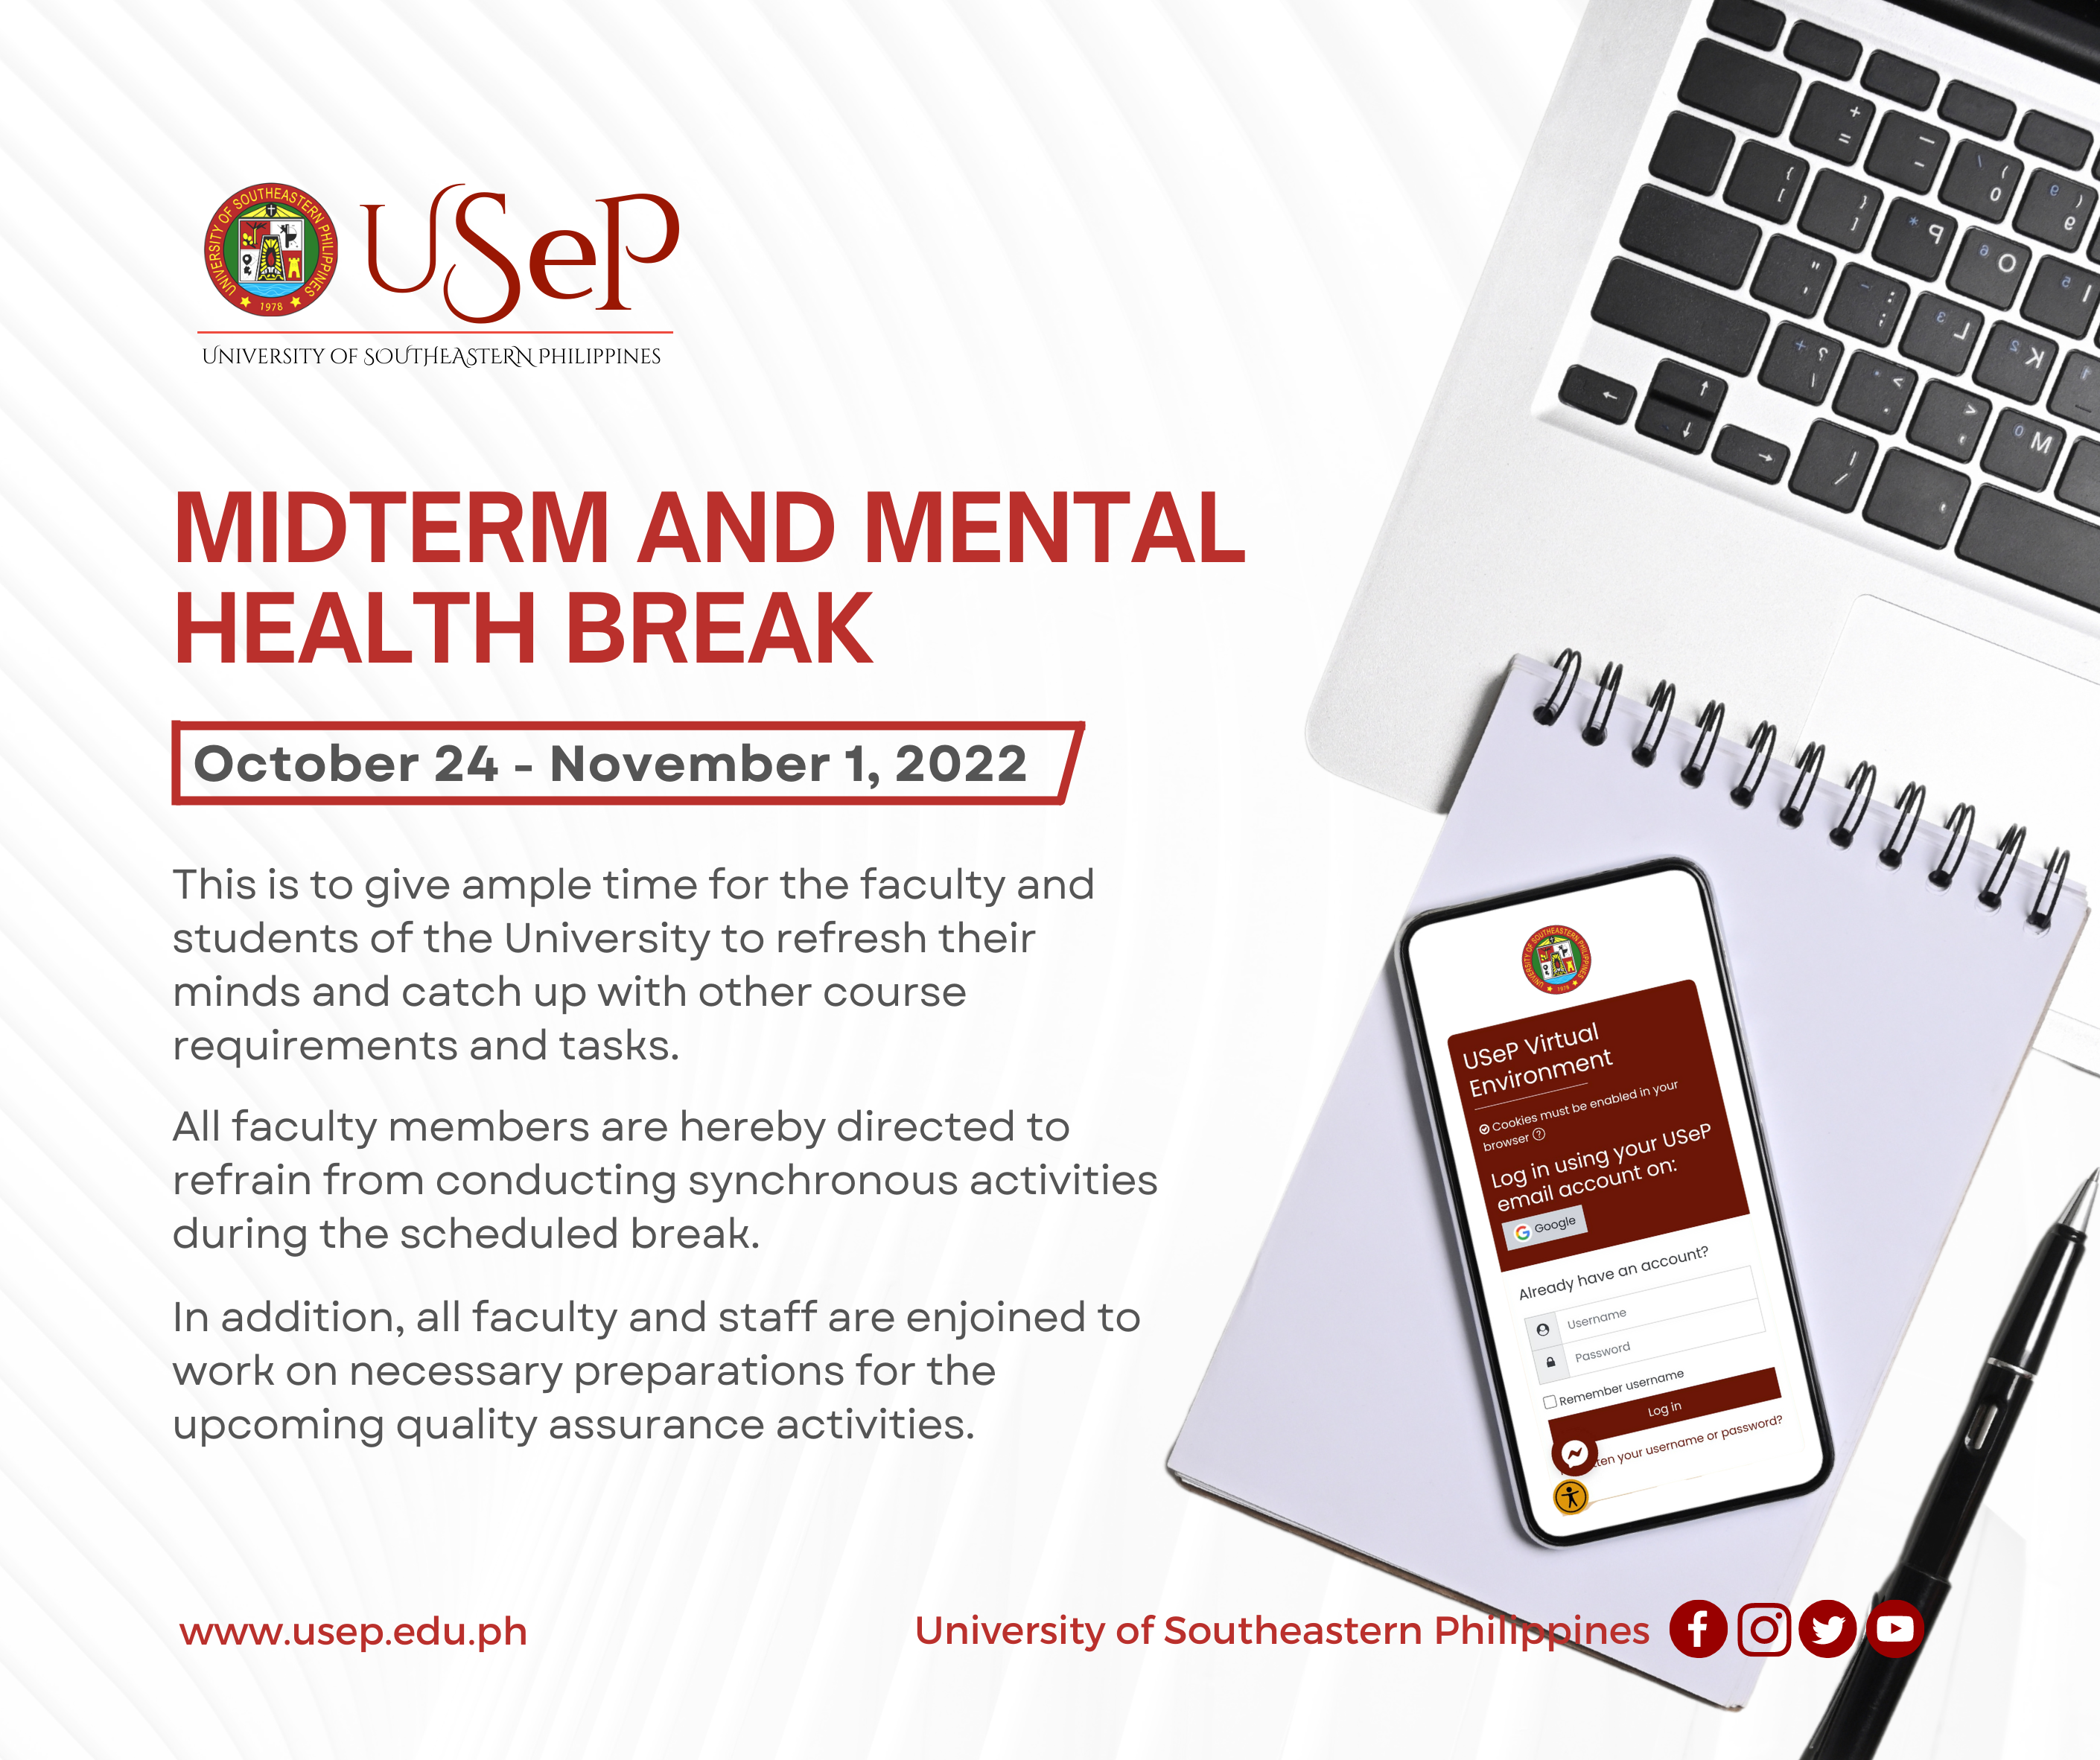 USeP Midterm and Mental Health Break (October 24- November 1, 2022)